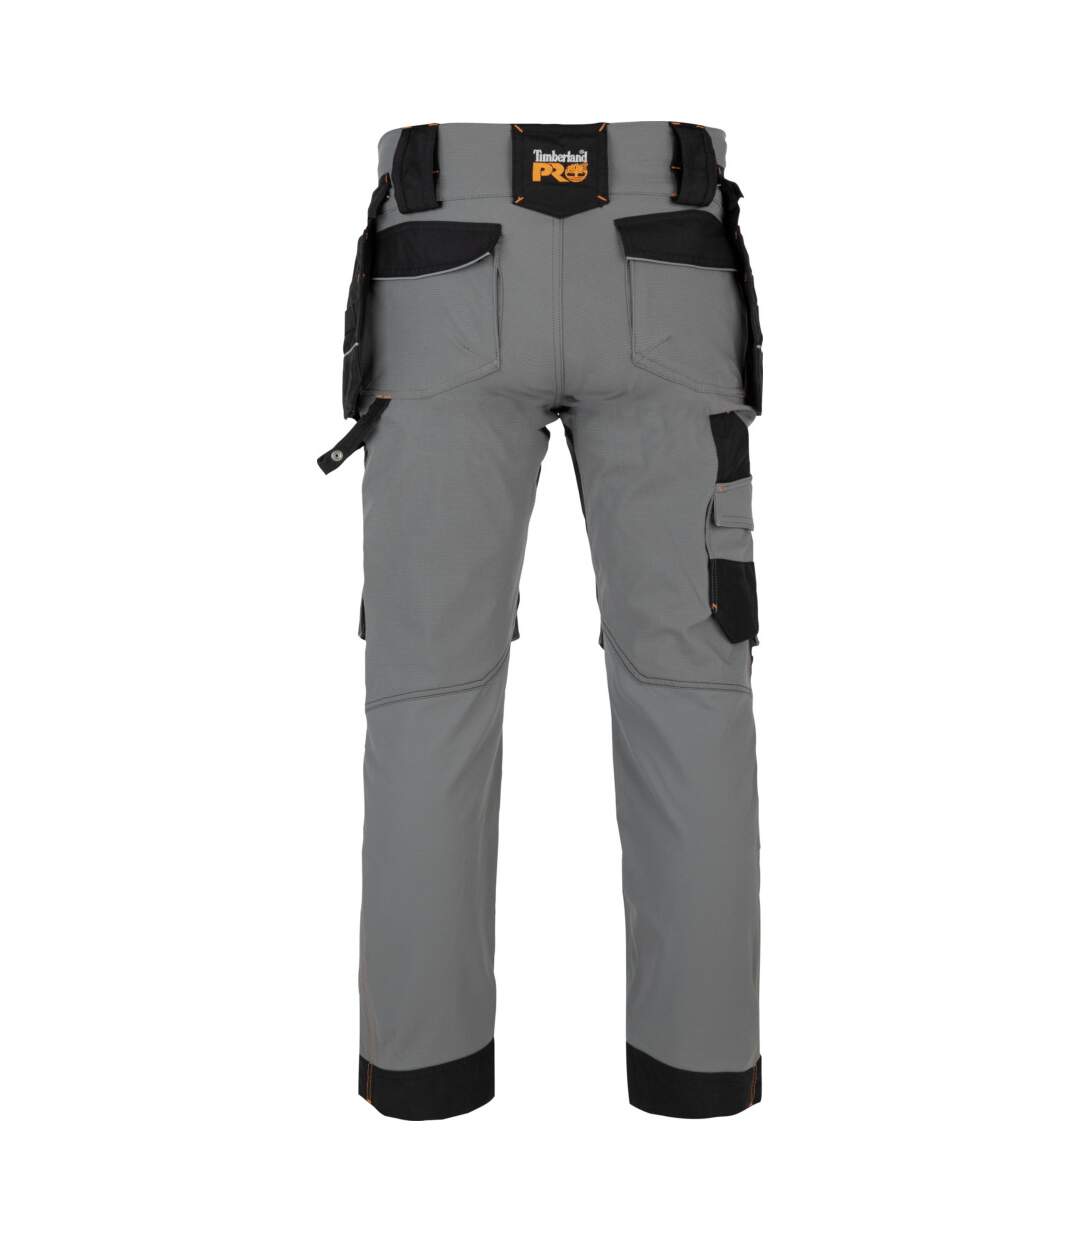 Pantalon de travail Morphix Timberland Pro gris/noir